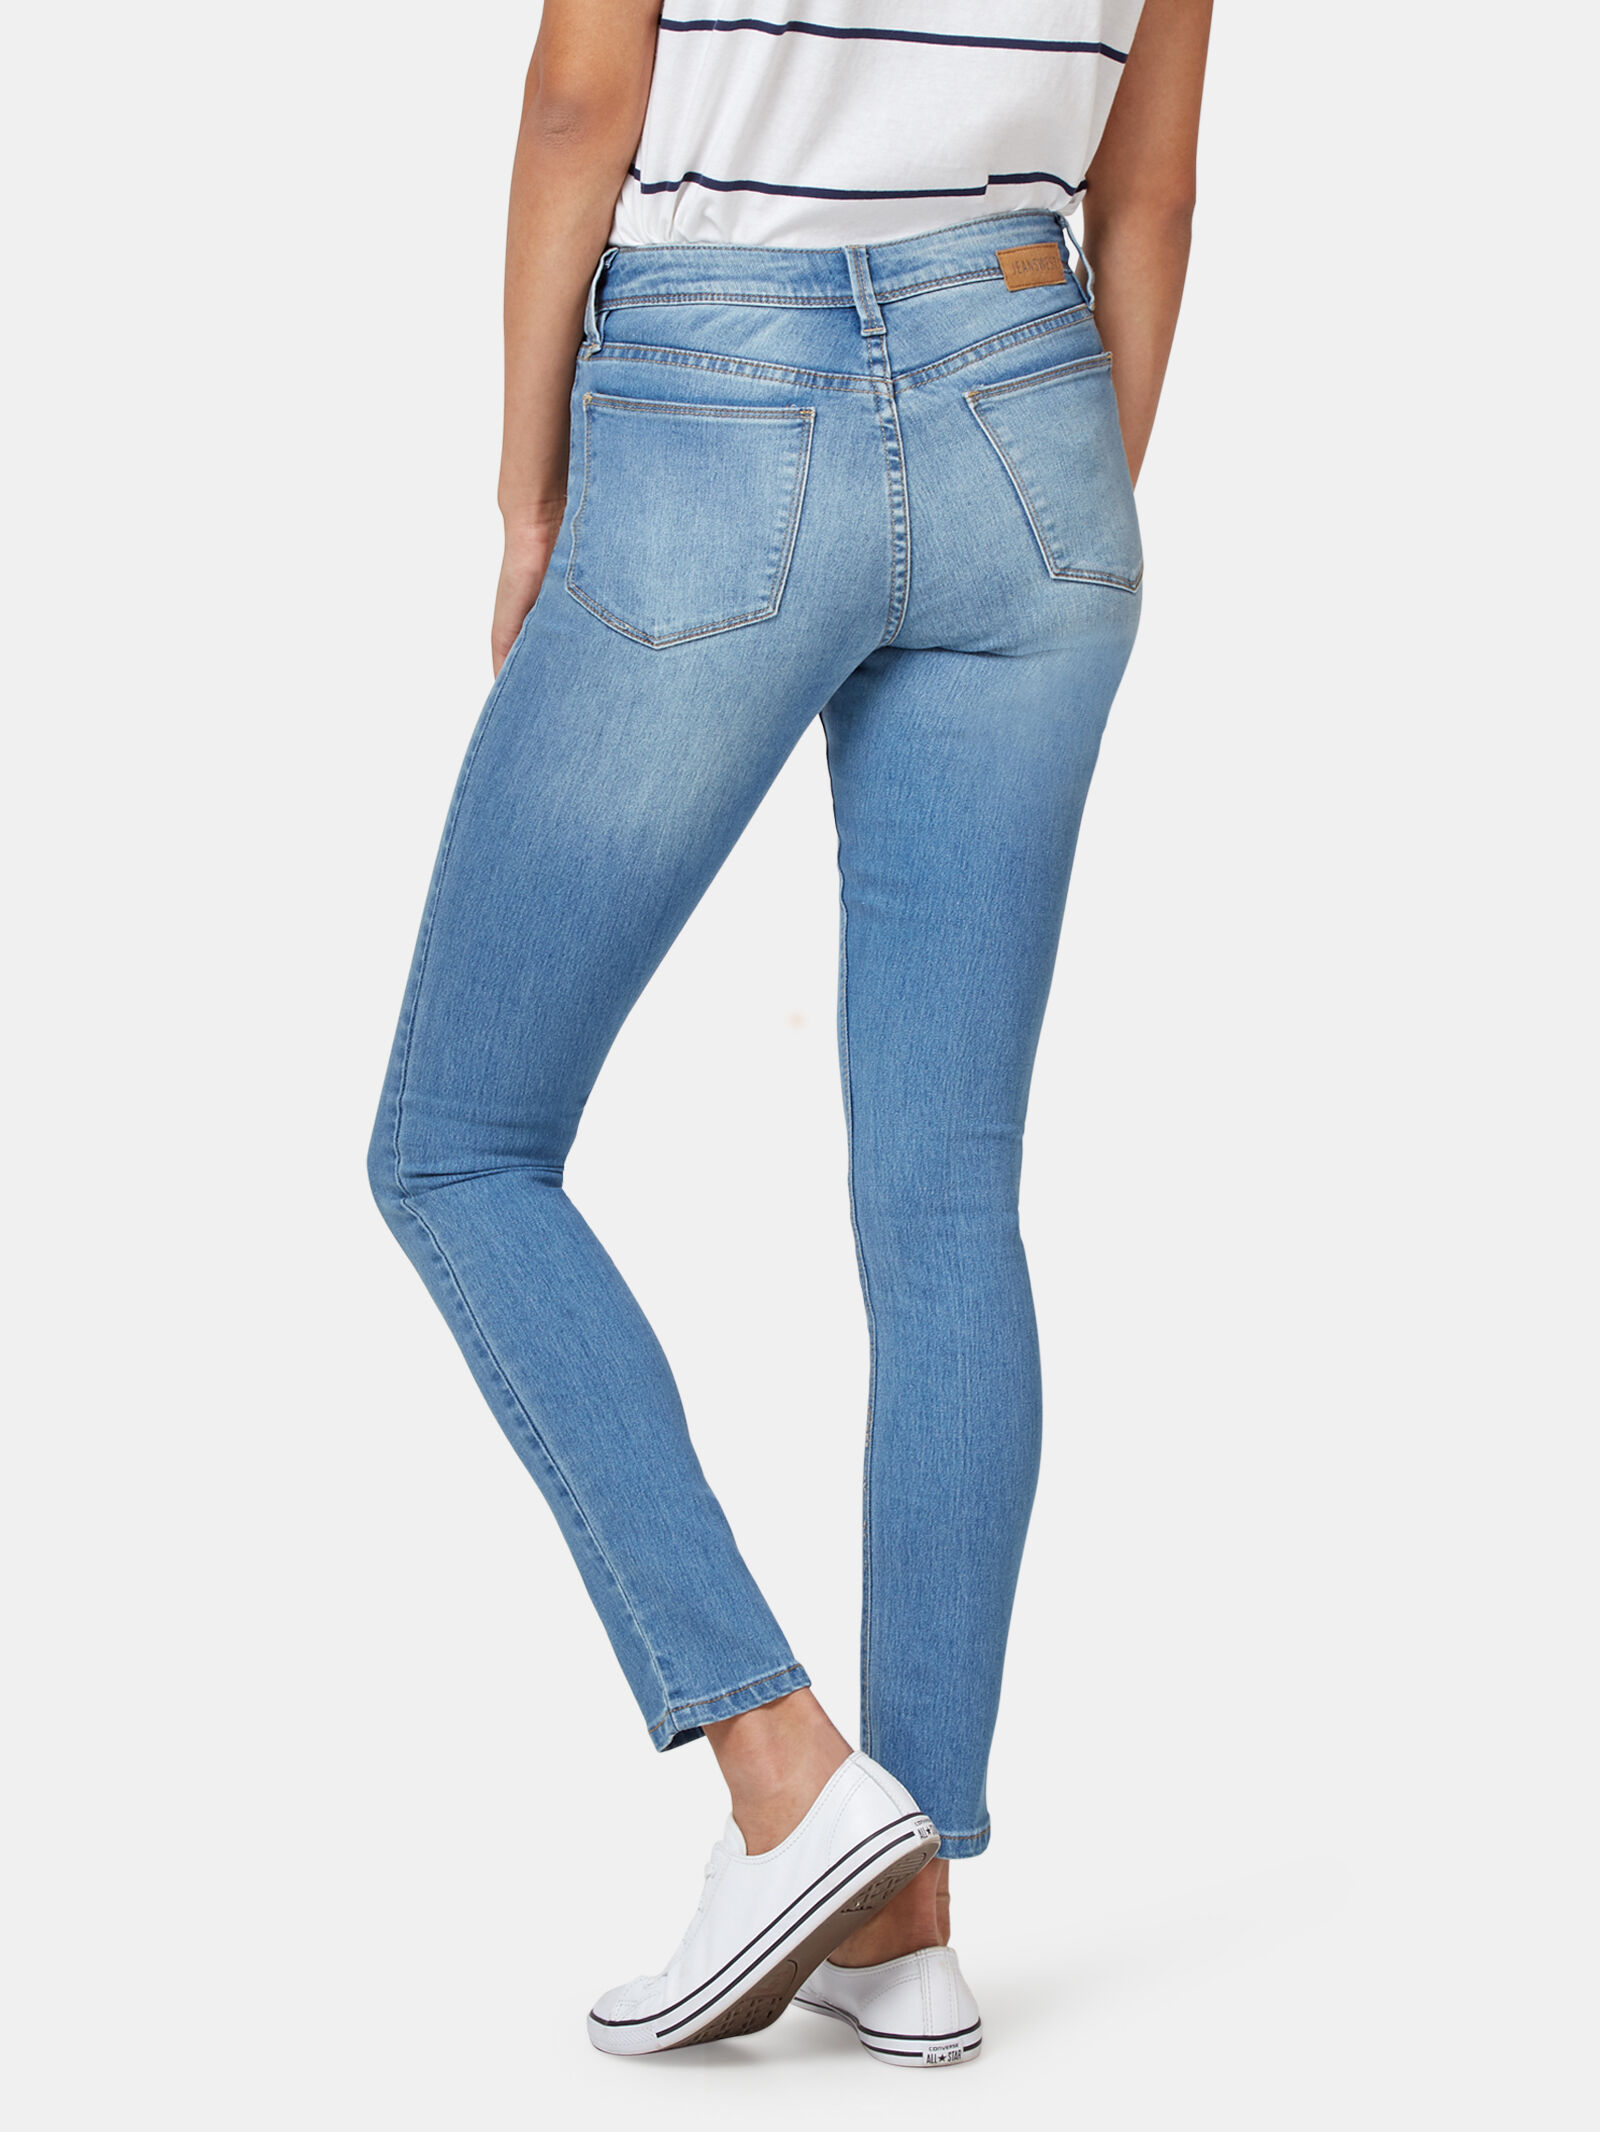 Discover more than 140 soft denim skinny jeans